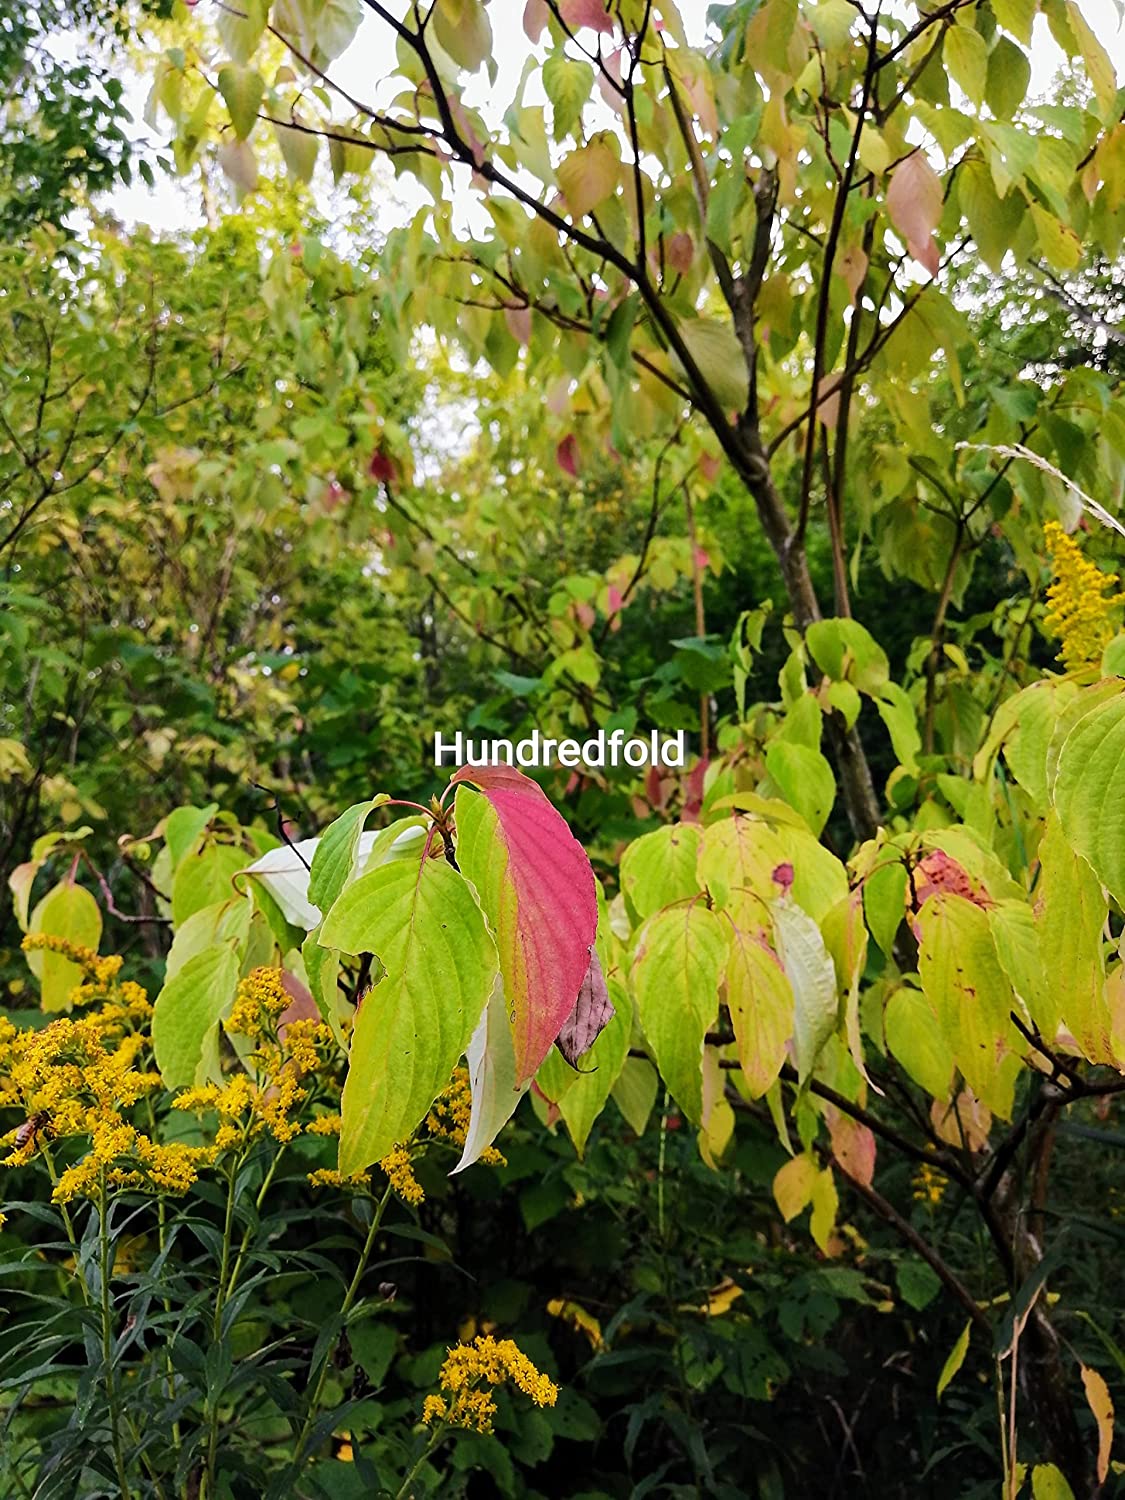 Hundredfold 10 Pagoda Dogwood Shrub Seeds - Cornus alternifolia Alternative Leaf Dogwood Ontario Native Small Tree, with Four Season Interests